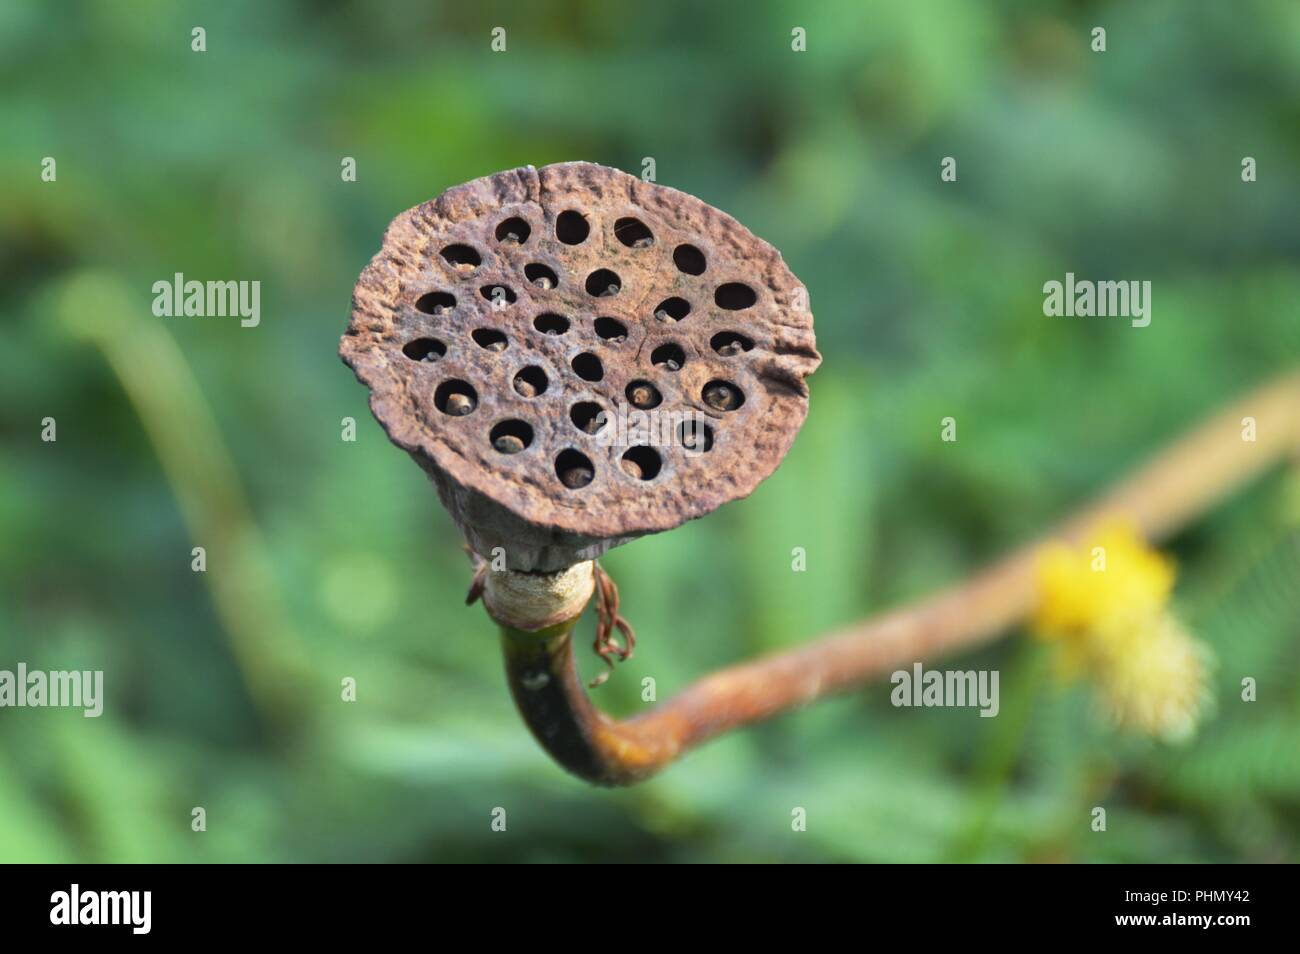 a lotus flower bud Stock Photo